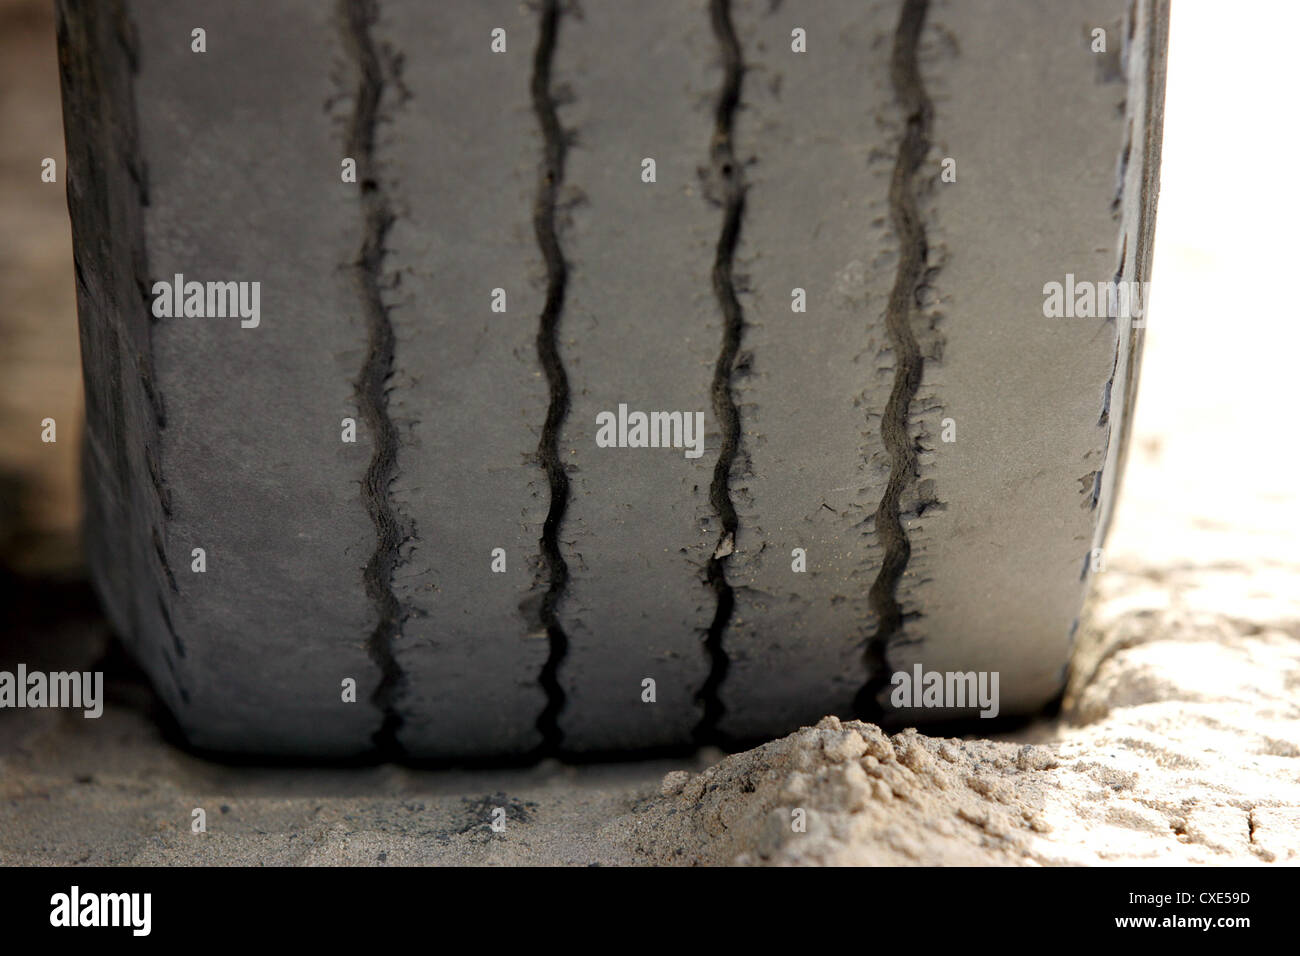 Symbol photo, worn tires Stock Photo